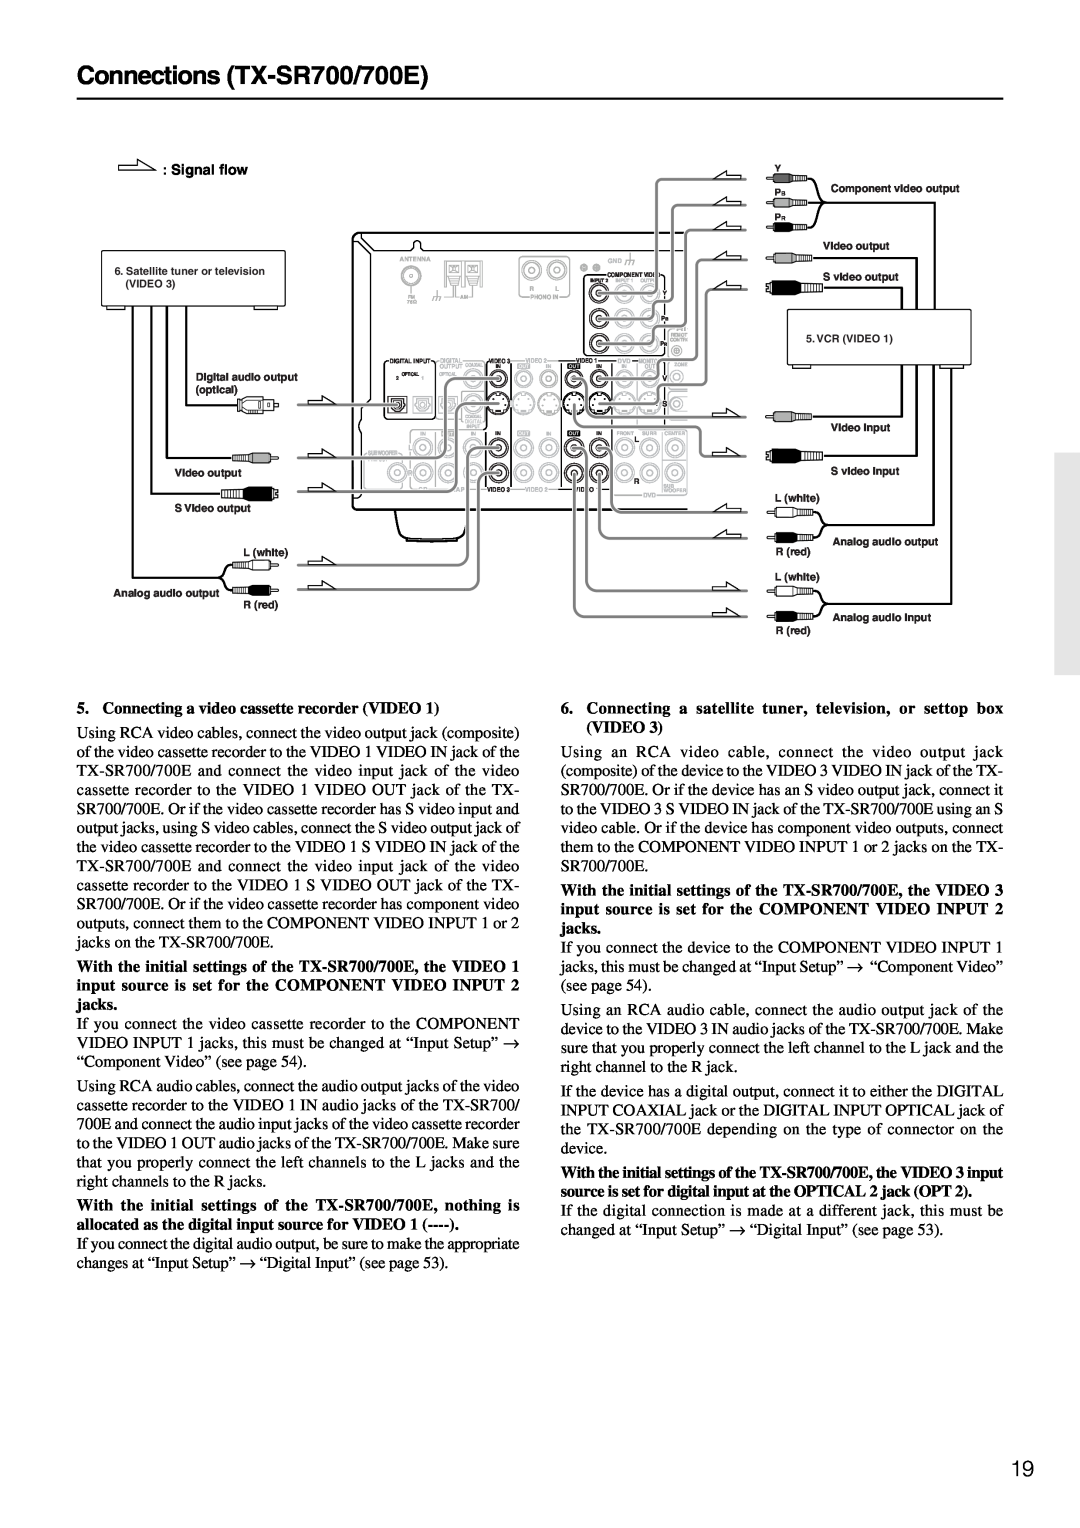 Onkyo TX-SR600/600E instruction manual Connections TX-SR700/700E, Connecting a video cassette recorder VIDEO 